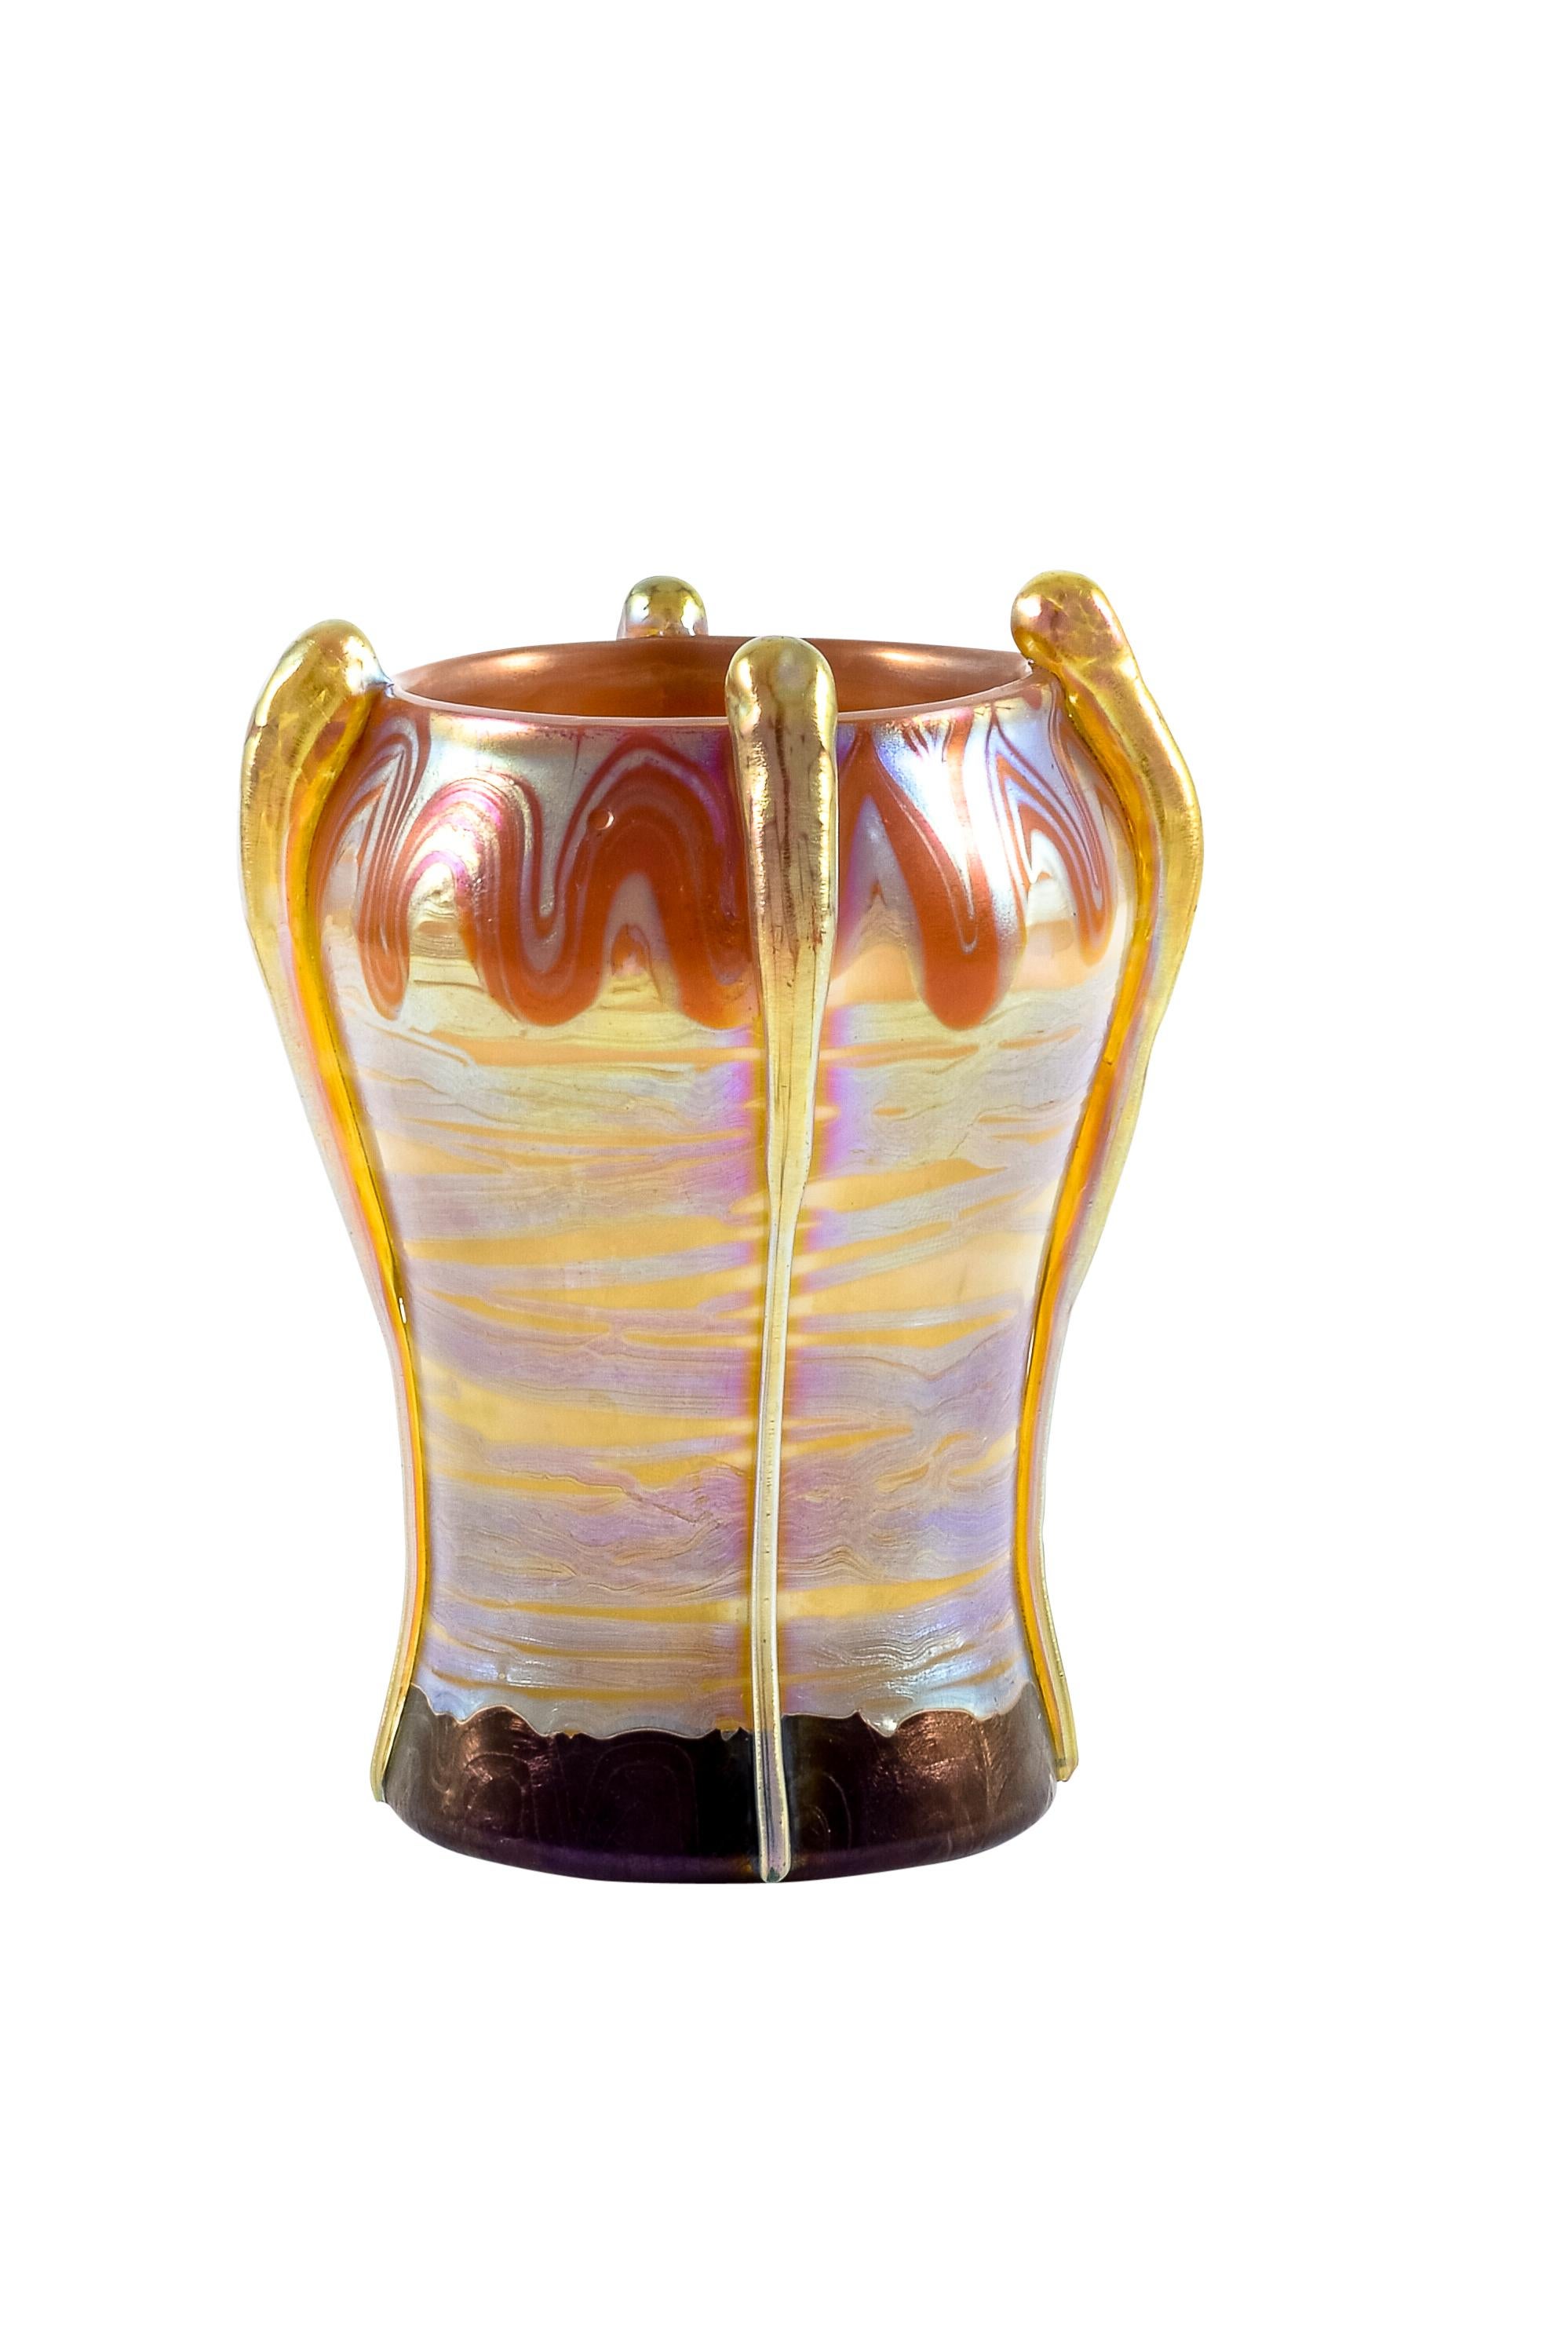 Art Nouveau Austrian Jugendstil Loetz Art Glass Vase Orange circa 1901 Koloman Moser School For Sale